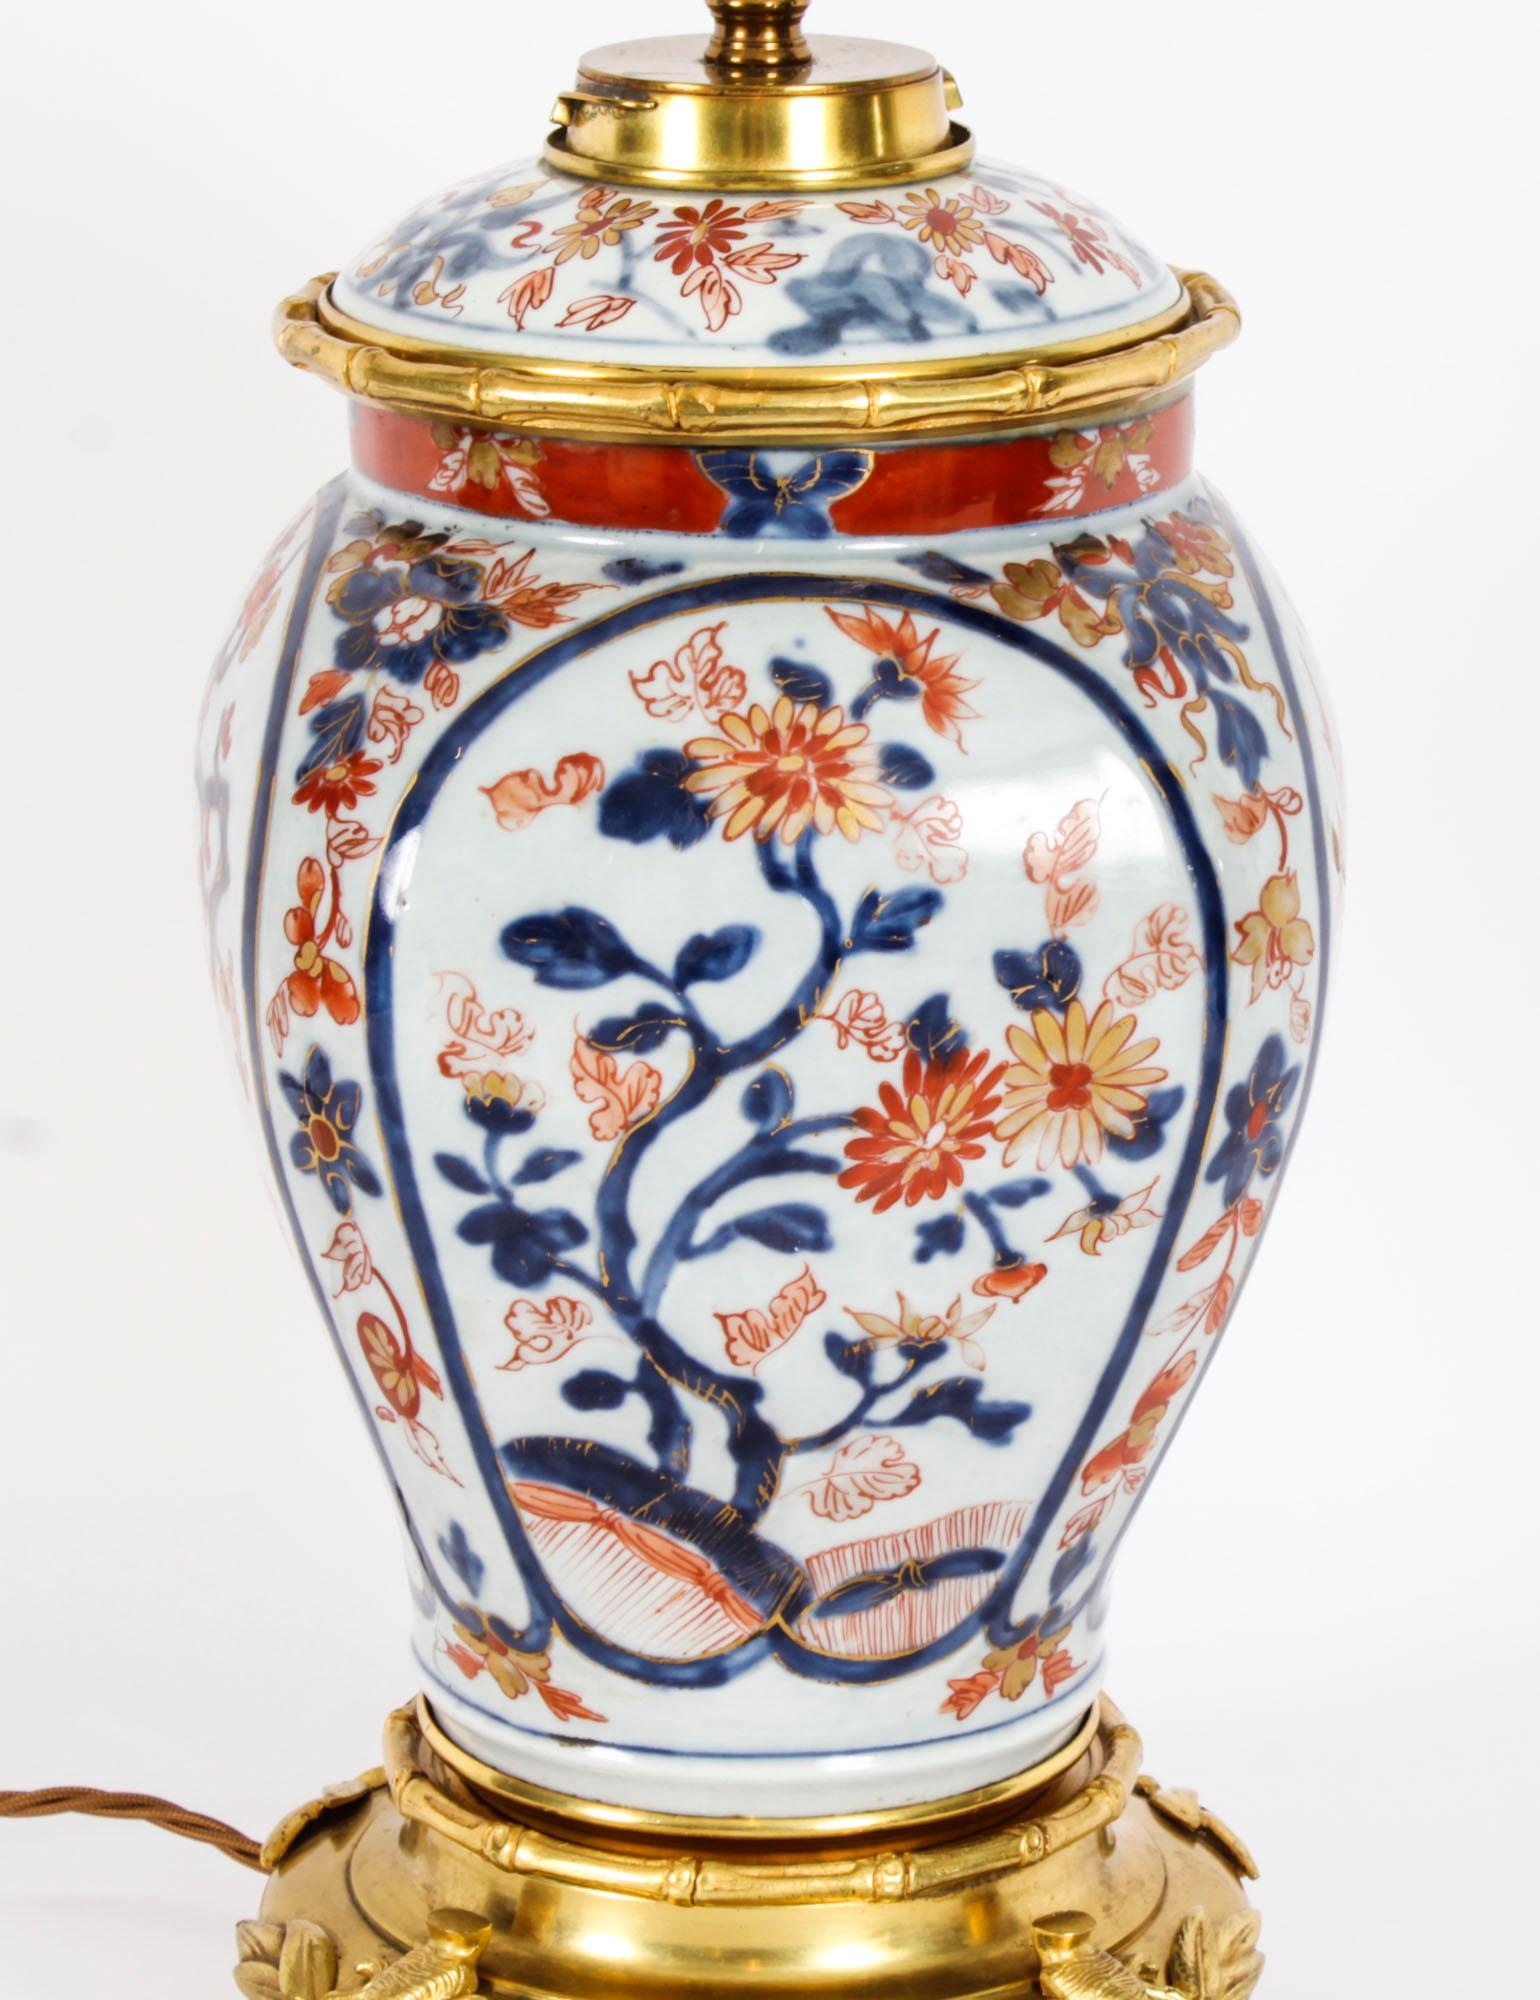 Antique Japanese Imari Porcelain Table Lamp c. 1840 19th Century For Sale 6